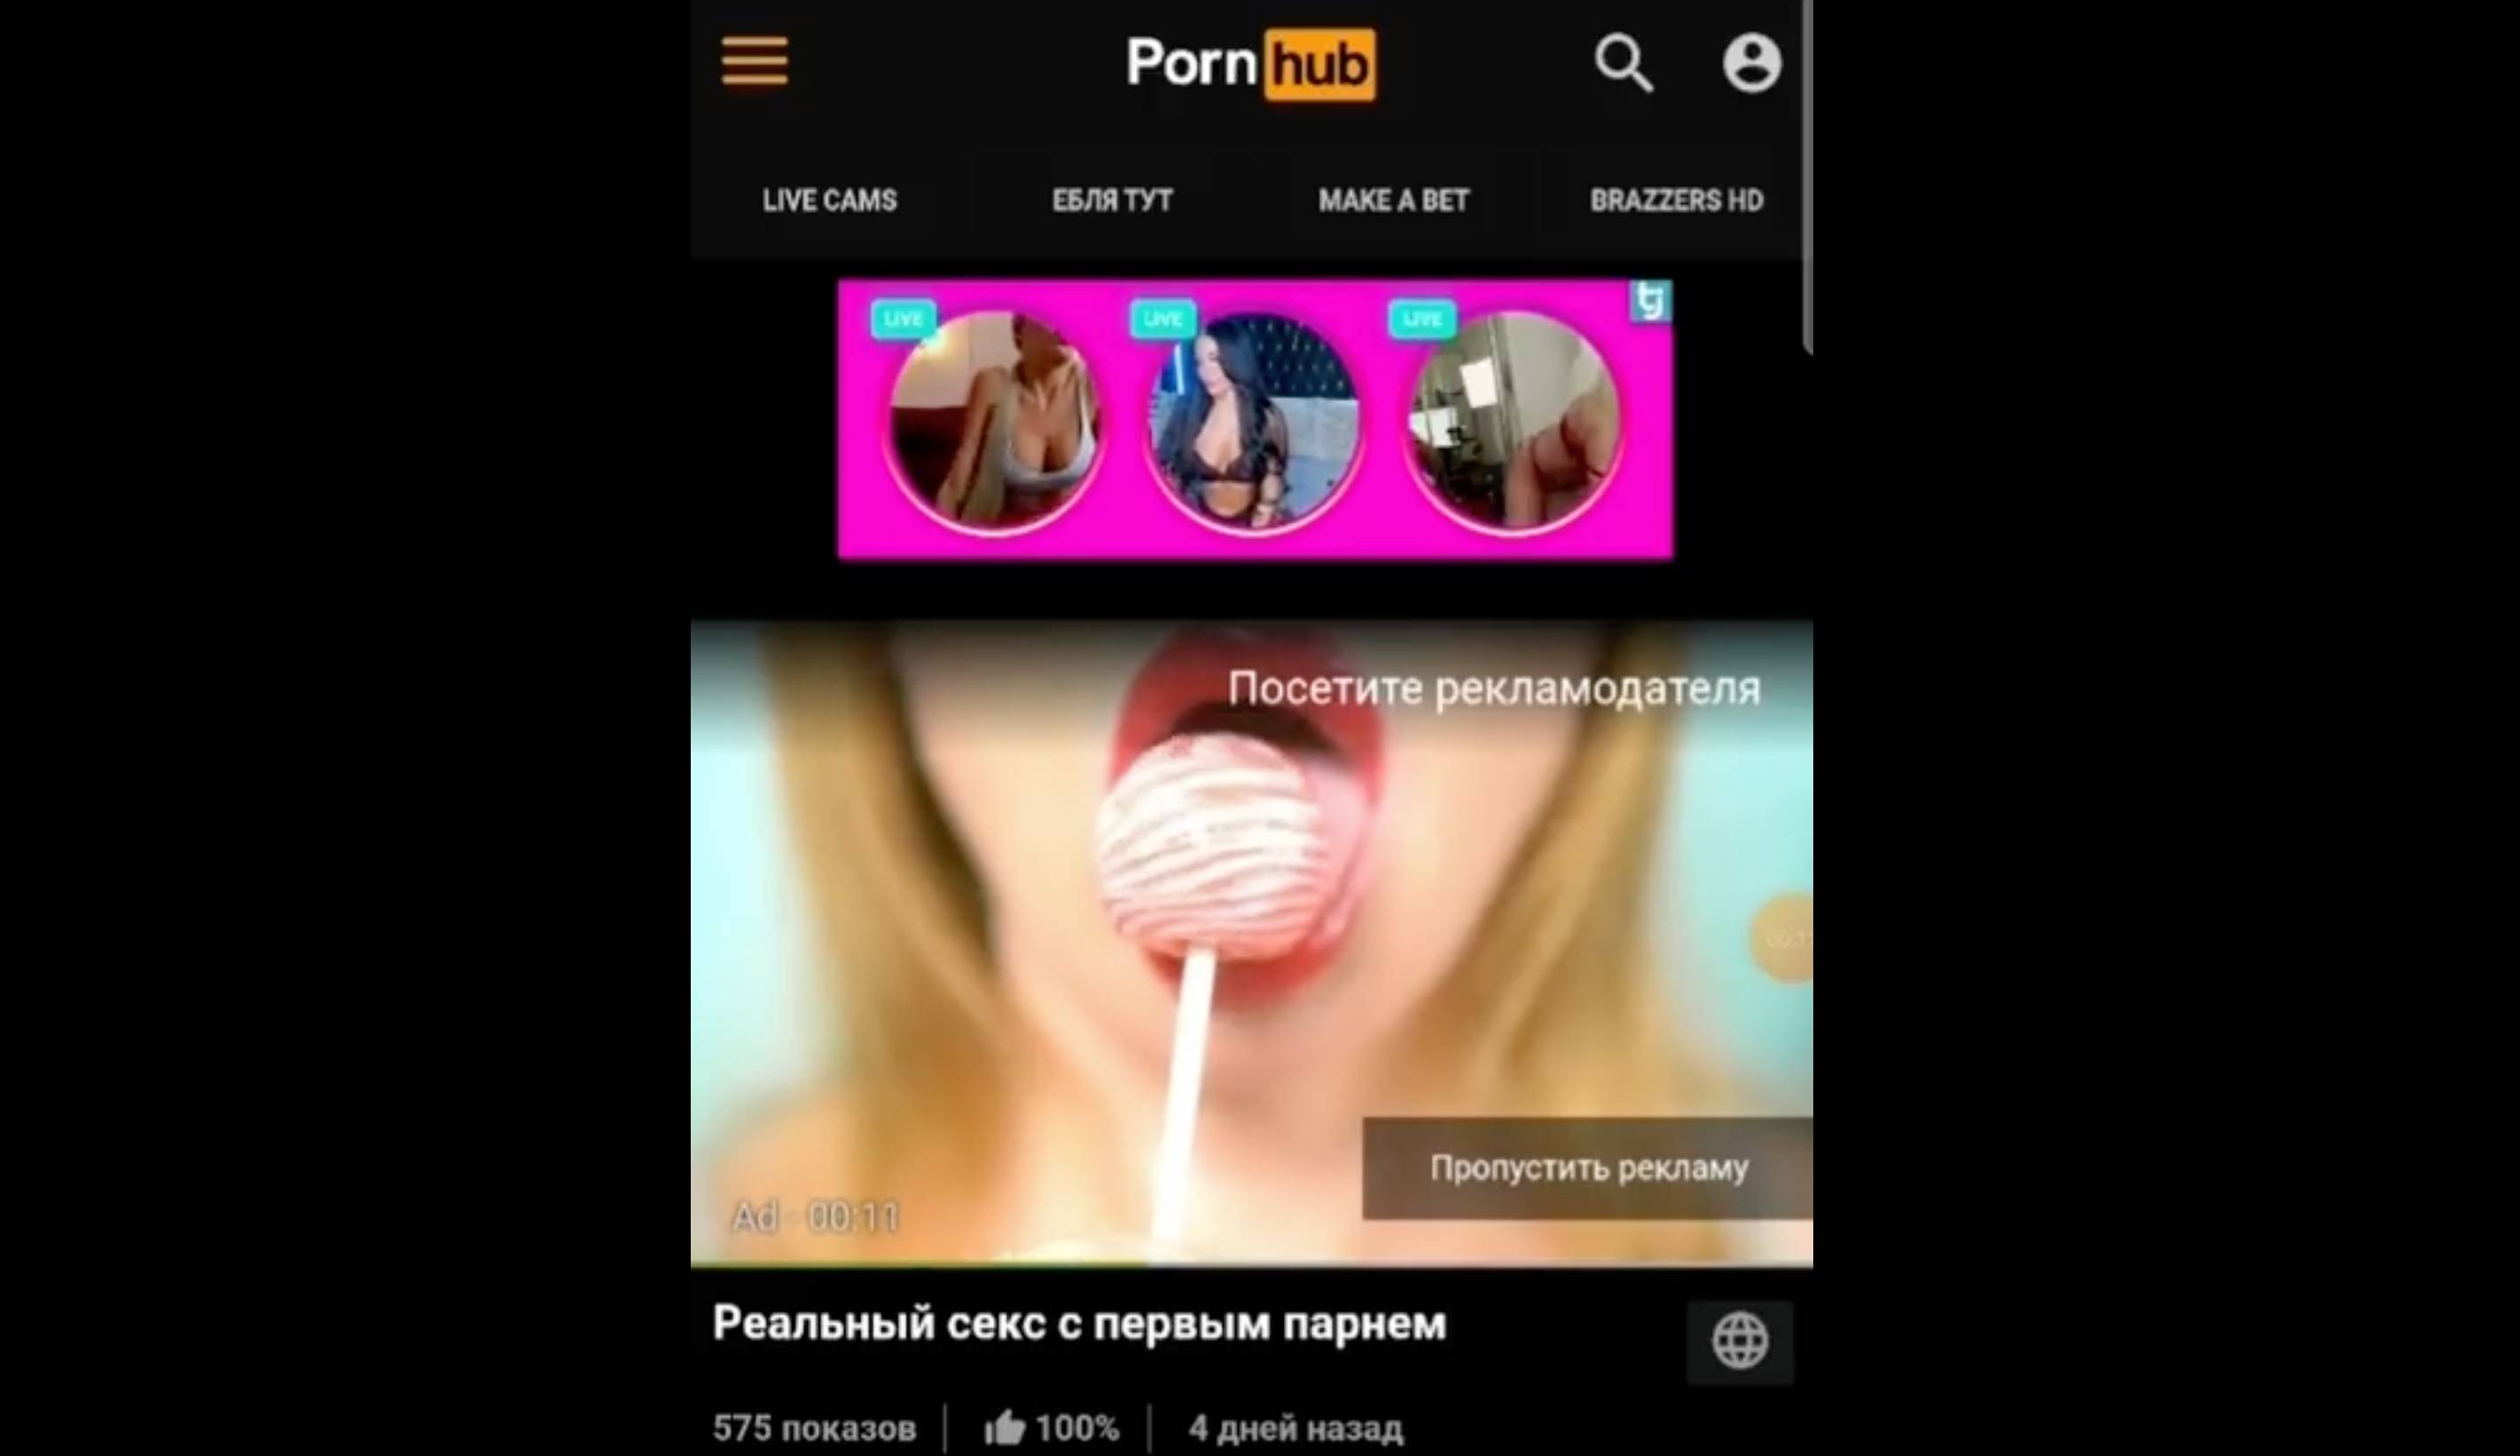 Notorious Russian Mercenaries Wagner Are Advertising on Pornhub